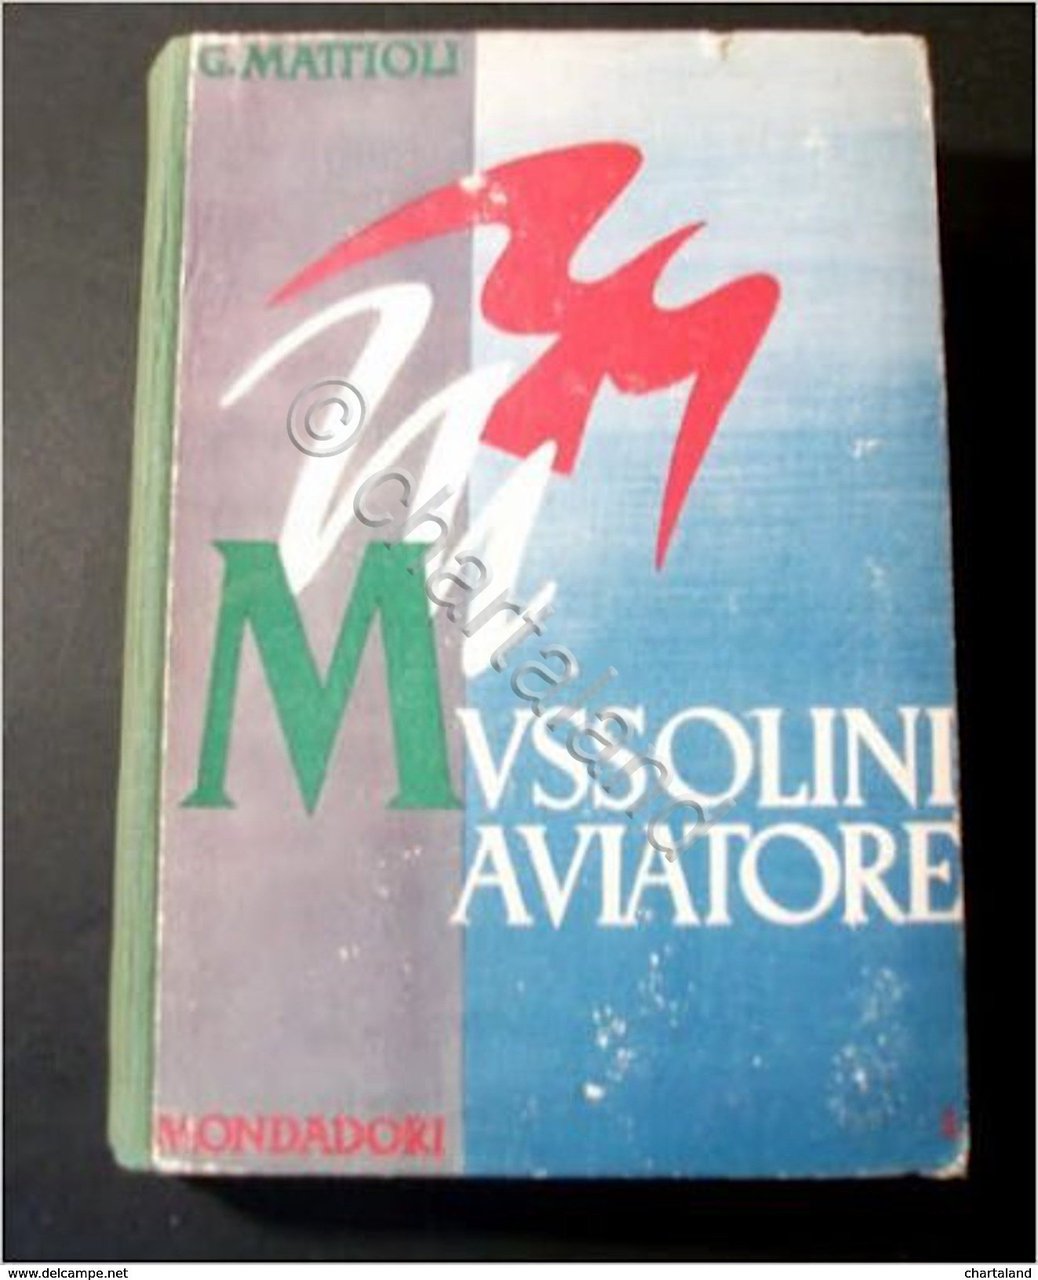 Aeronautica - G. Mattioli - Mussolini Aviatore - ed. 1942 …